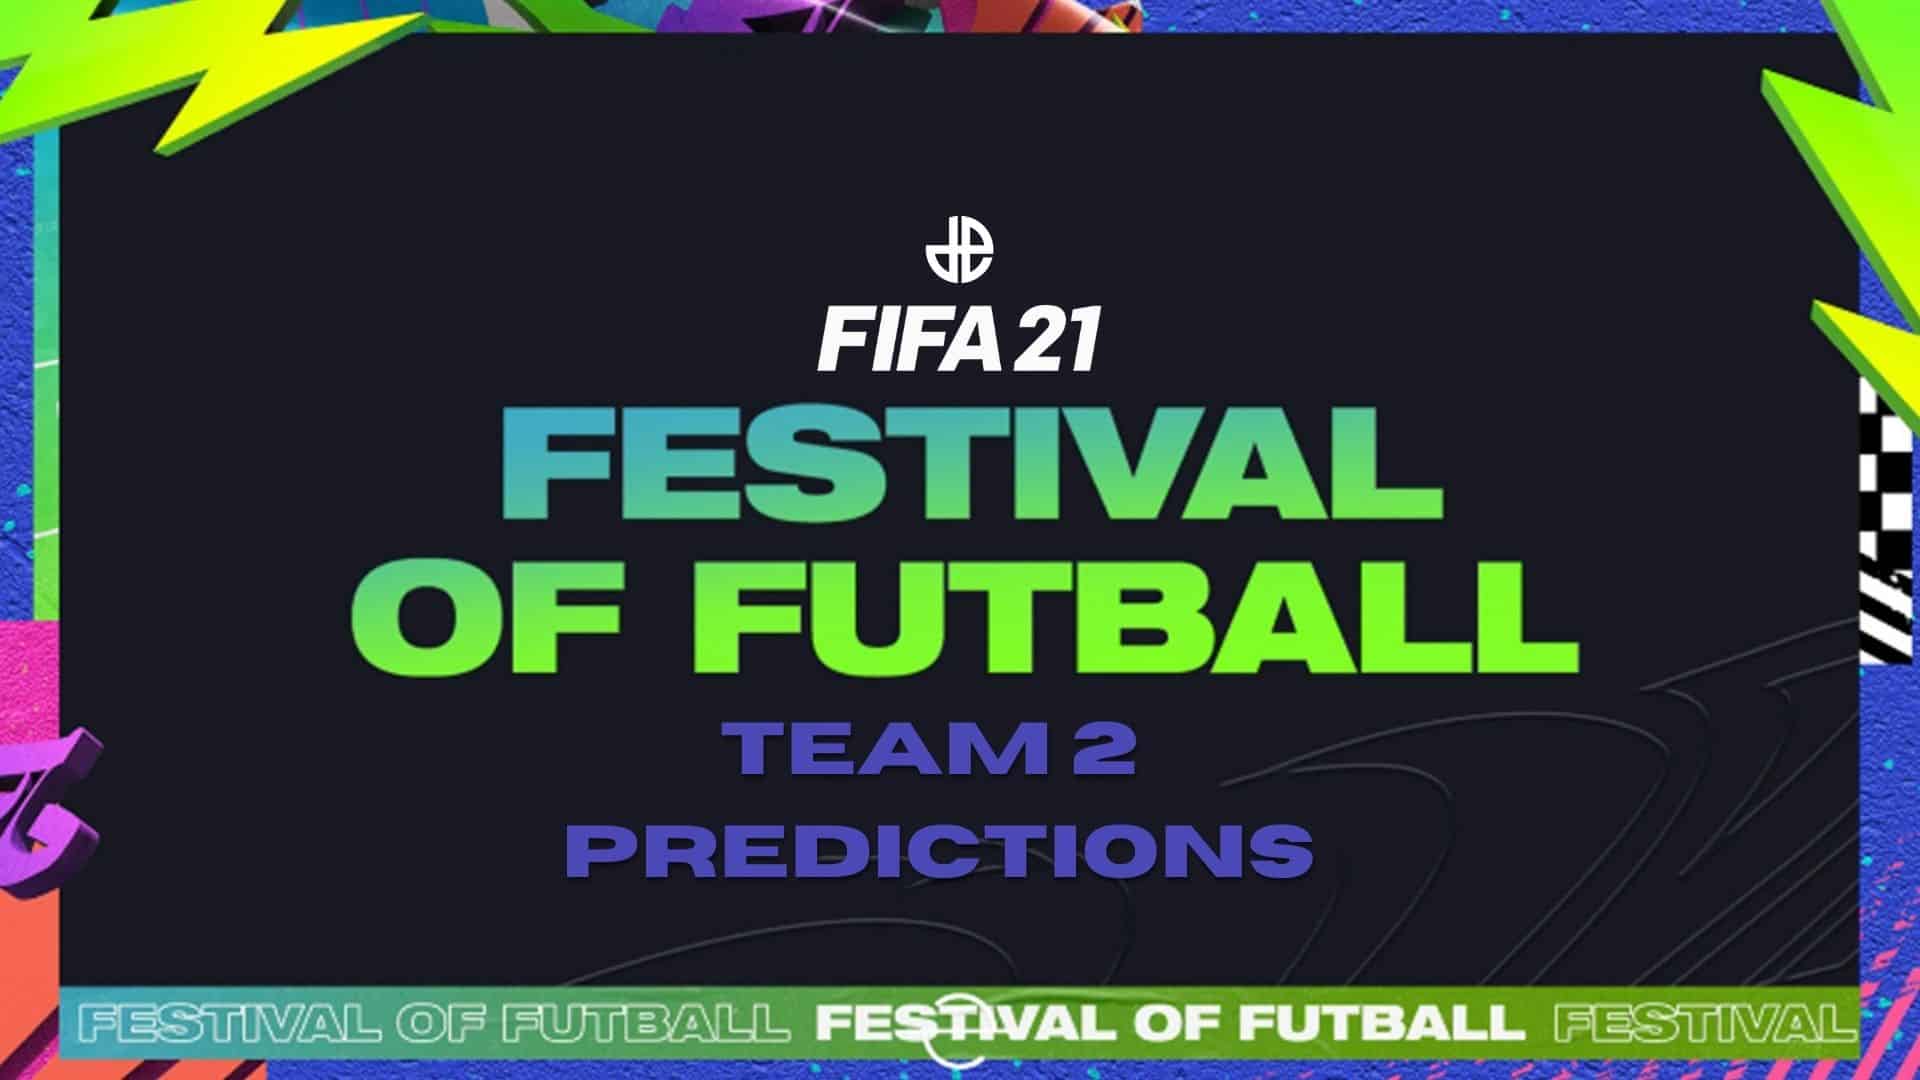 FIFA 21 Festival of Futball team 2 logo